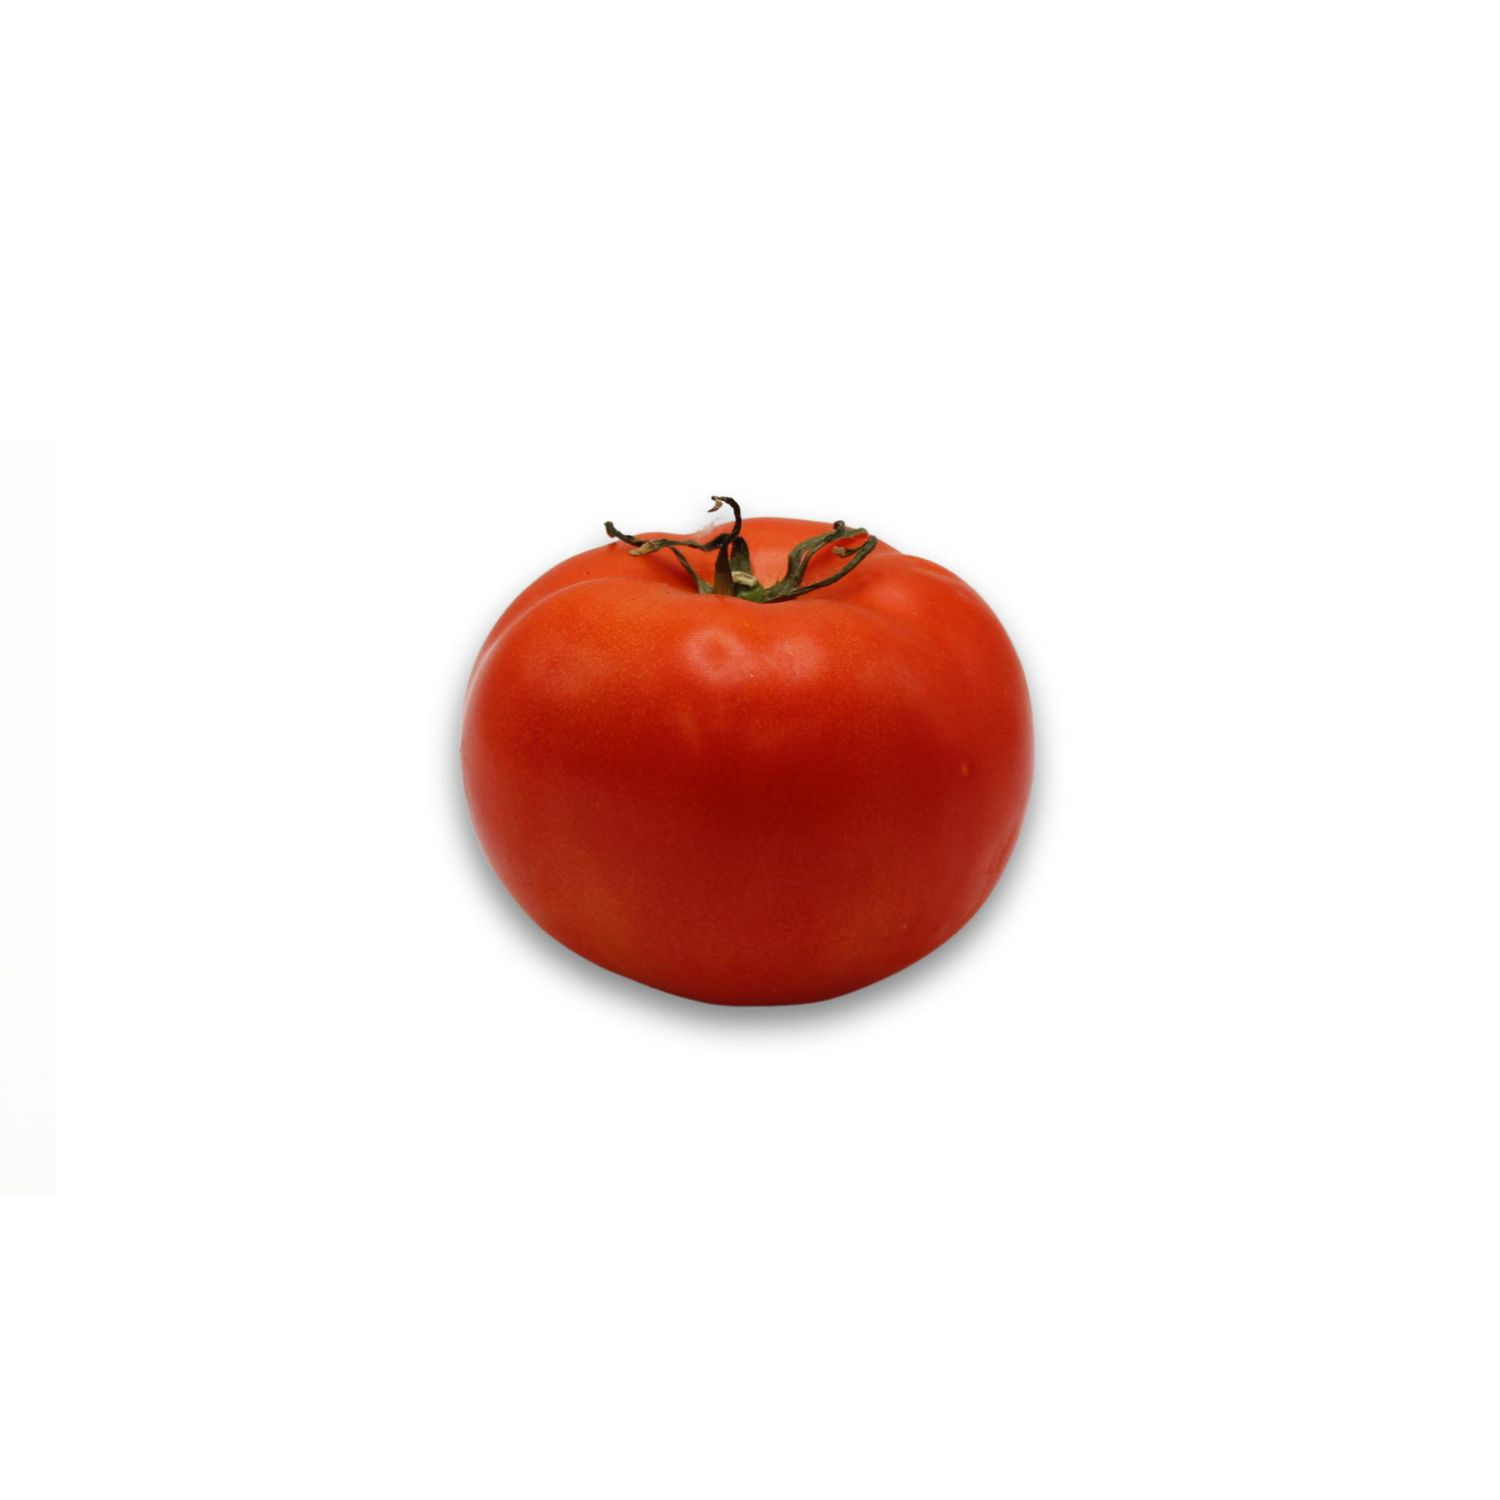 1 PC - Ontario Hothouse BeefSteak Tomato SPECIAL! – The Produce Guyz